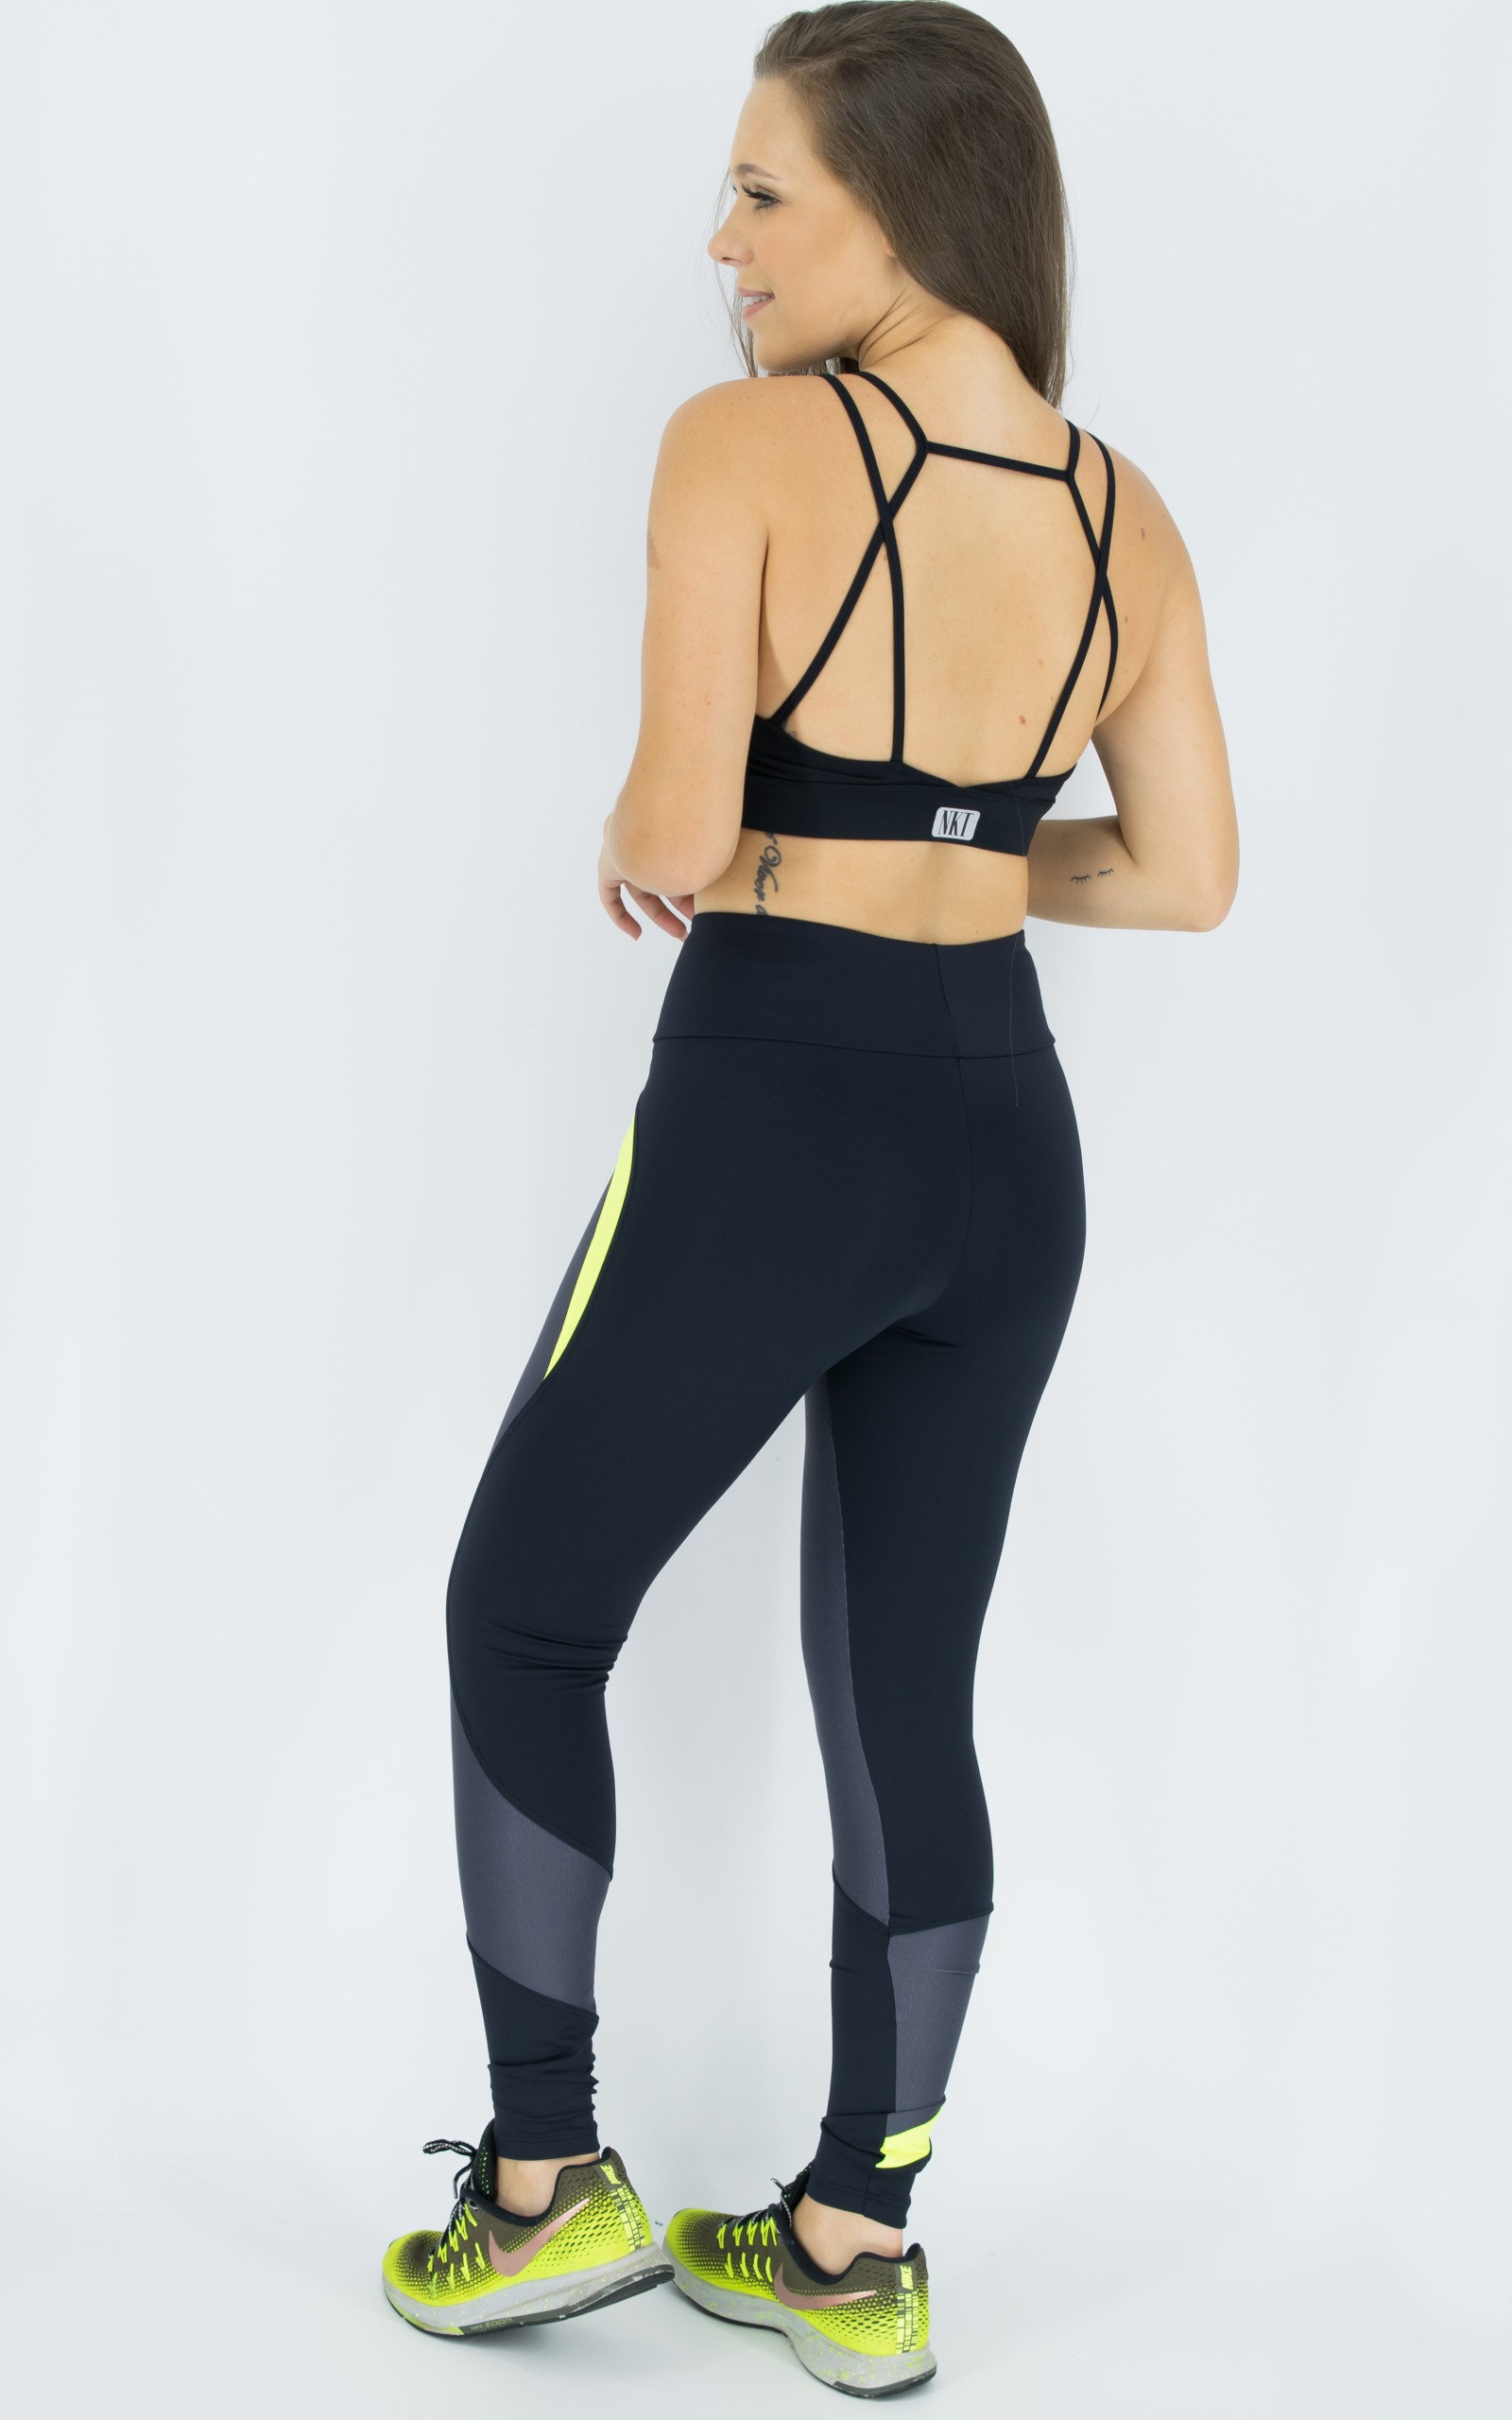 Legging Ocean Neon, Coleção Move Your Body - NKT Fitwear Moda Fitness